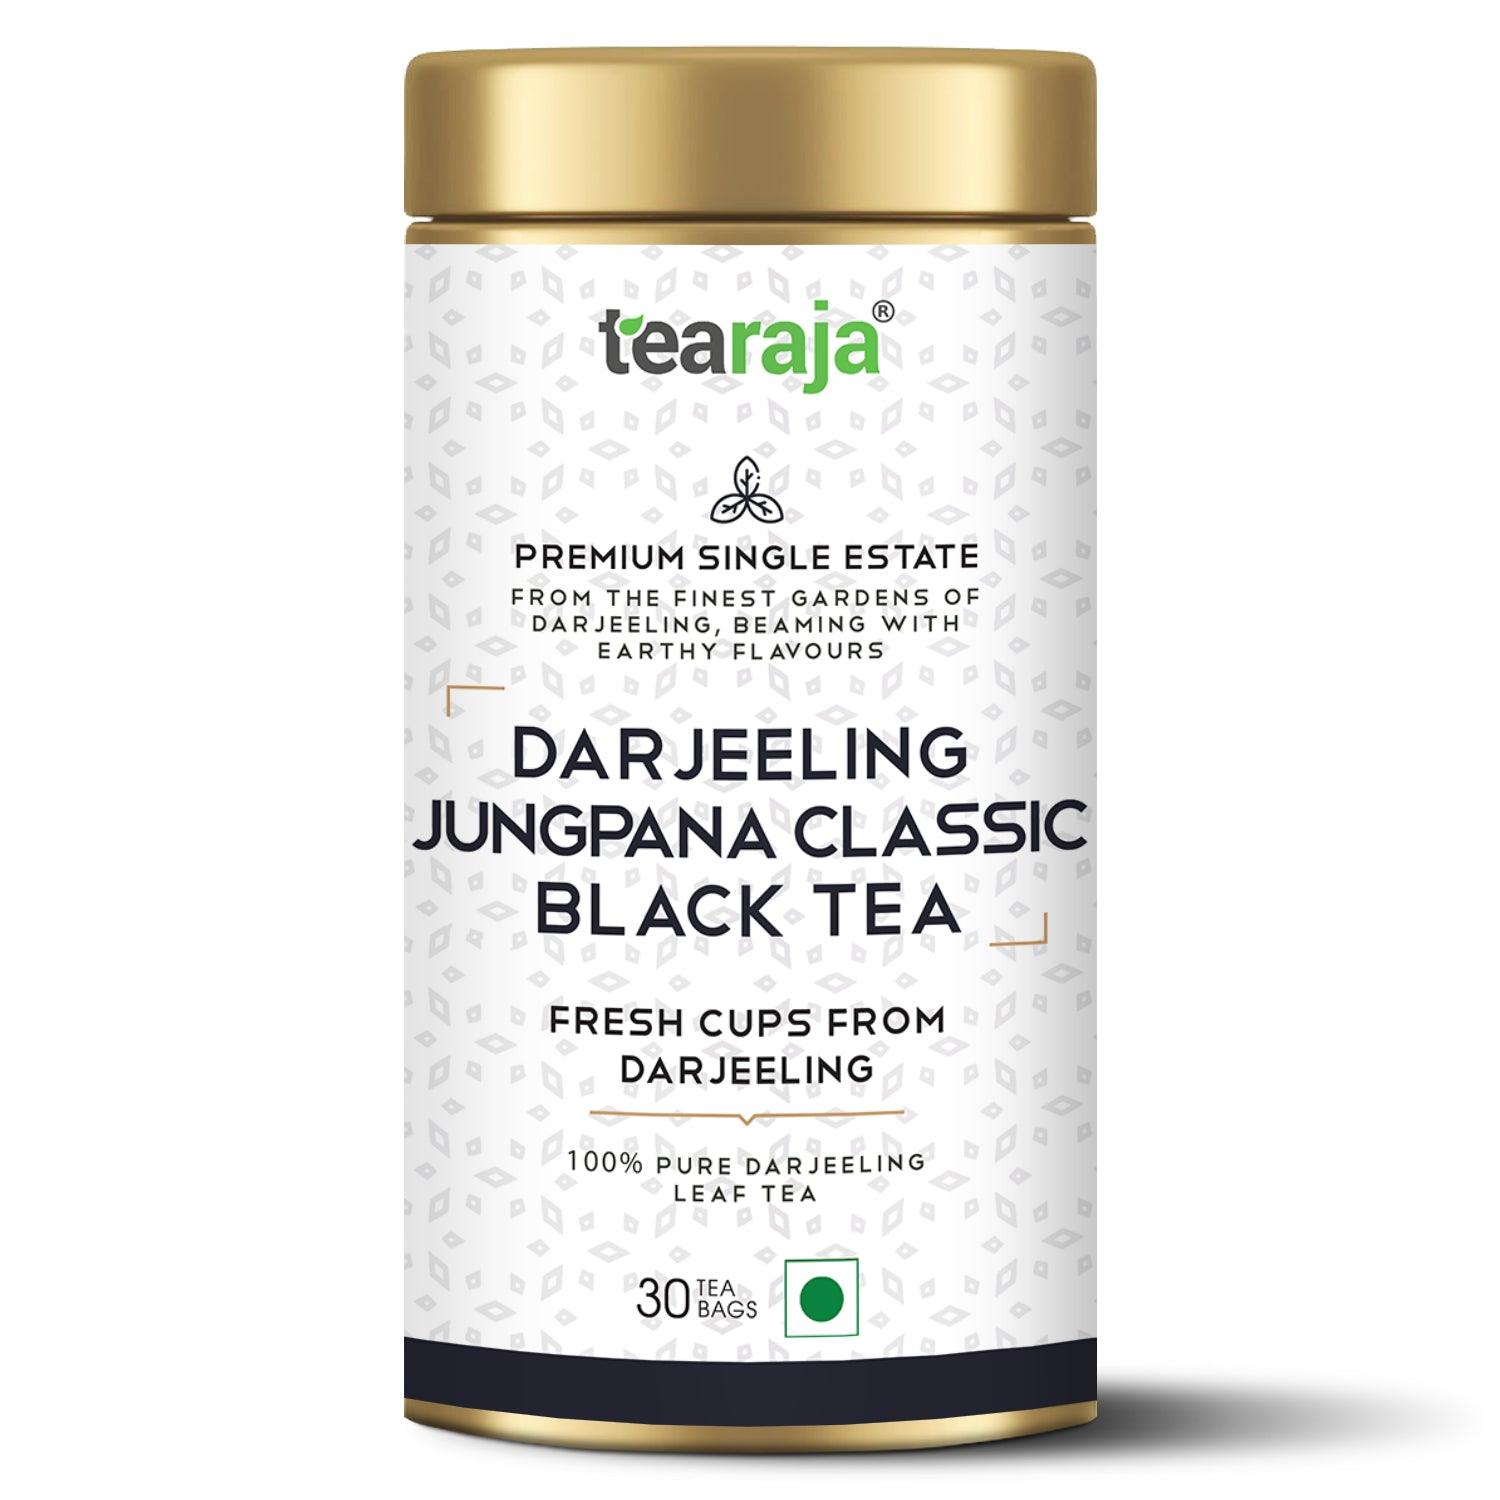 Darjeeling Jungpana Classic Black Tea 30 Tea Bags - Tearaja